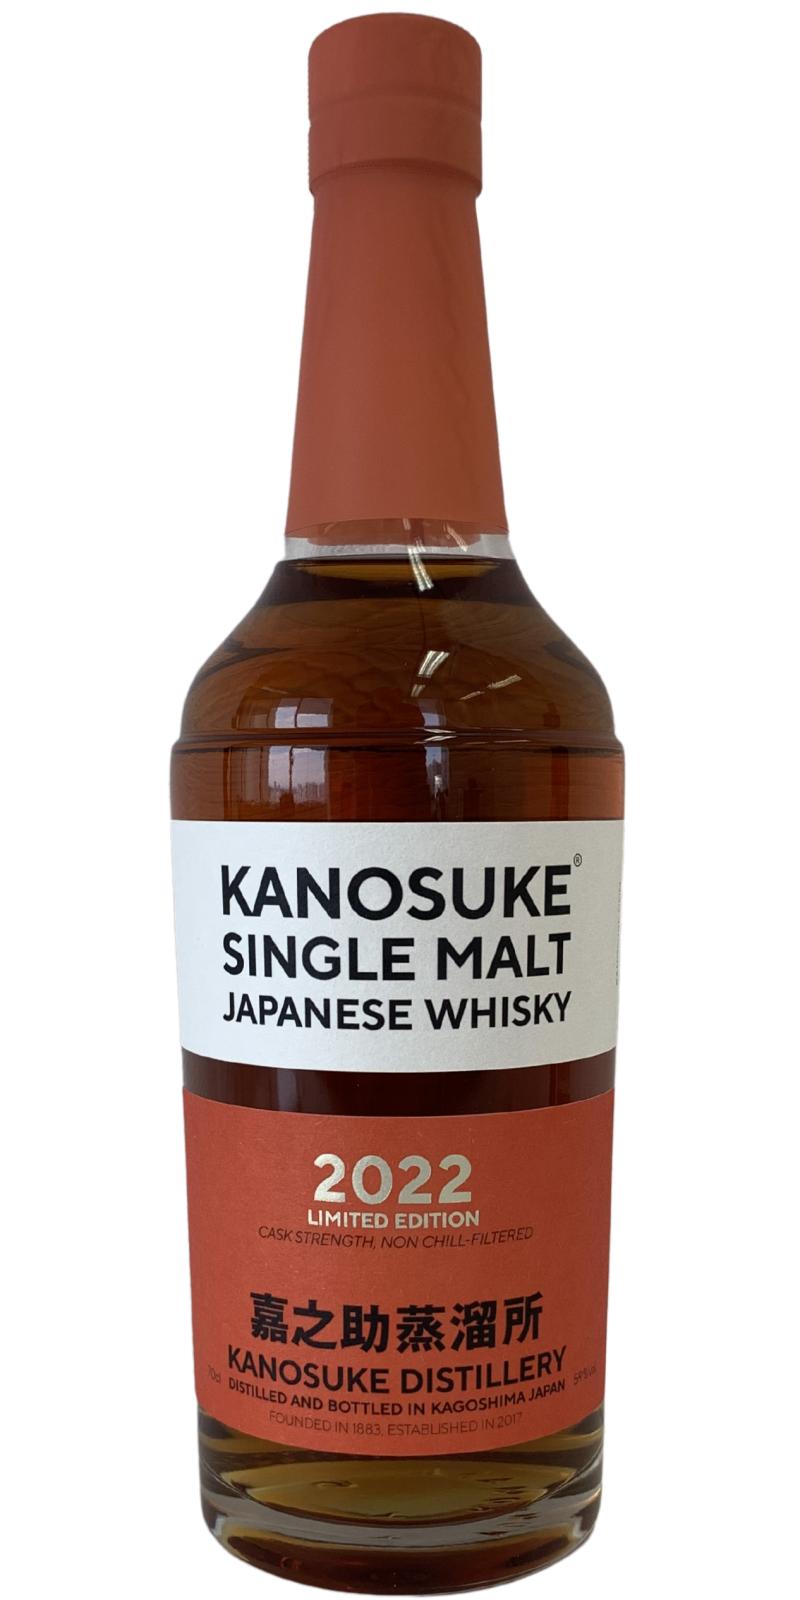 Kanosuke Single Malt - Value and price information - Whiskystats